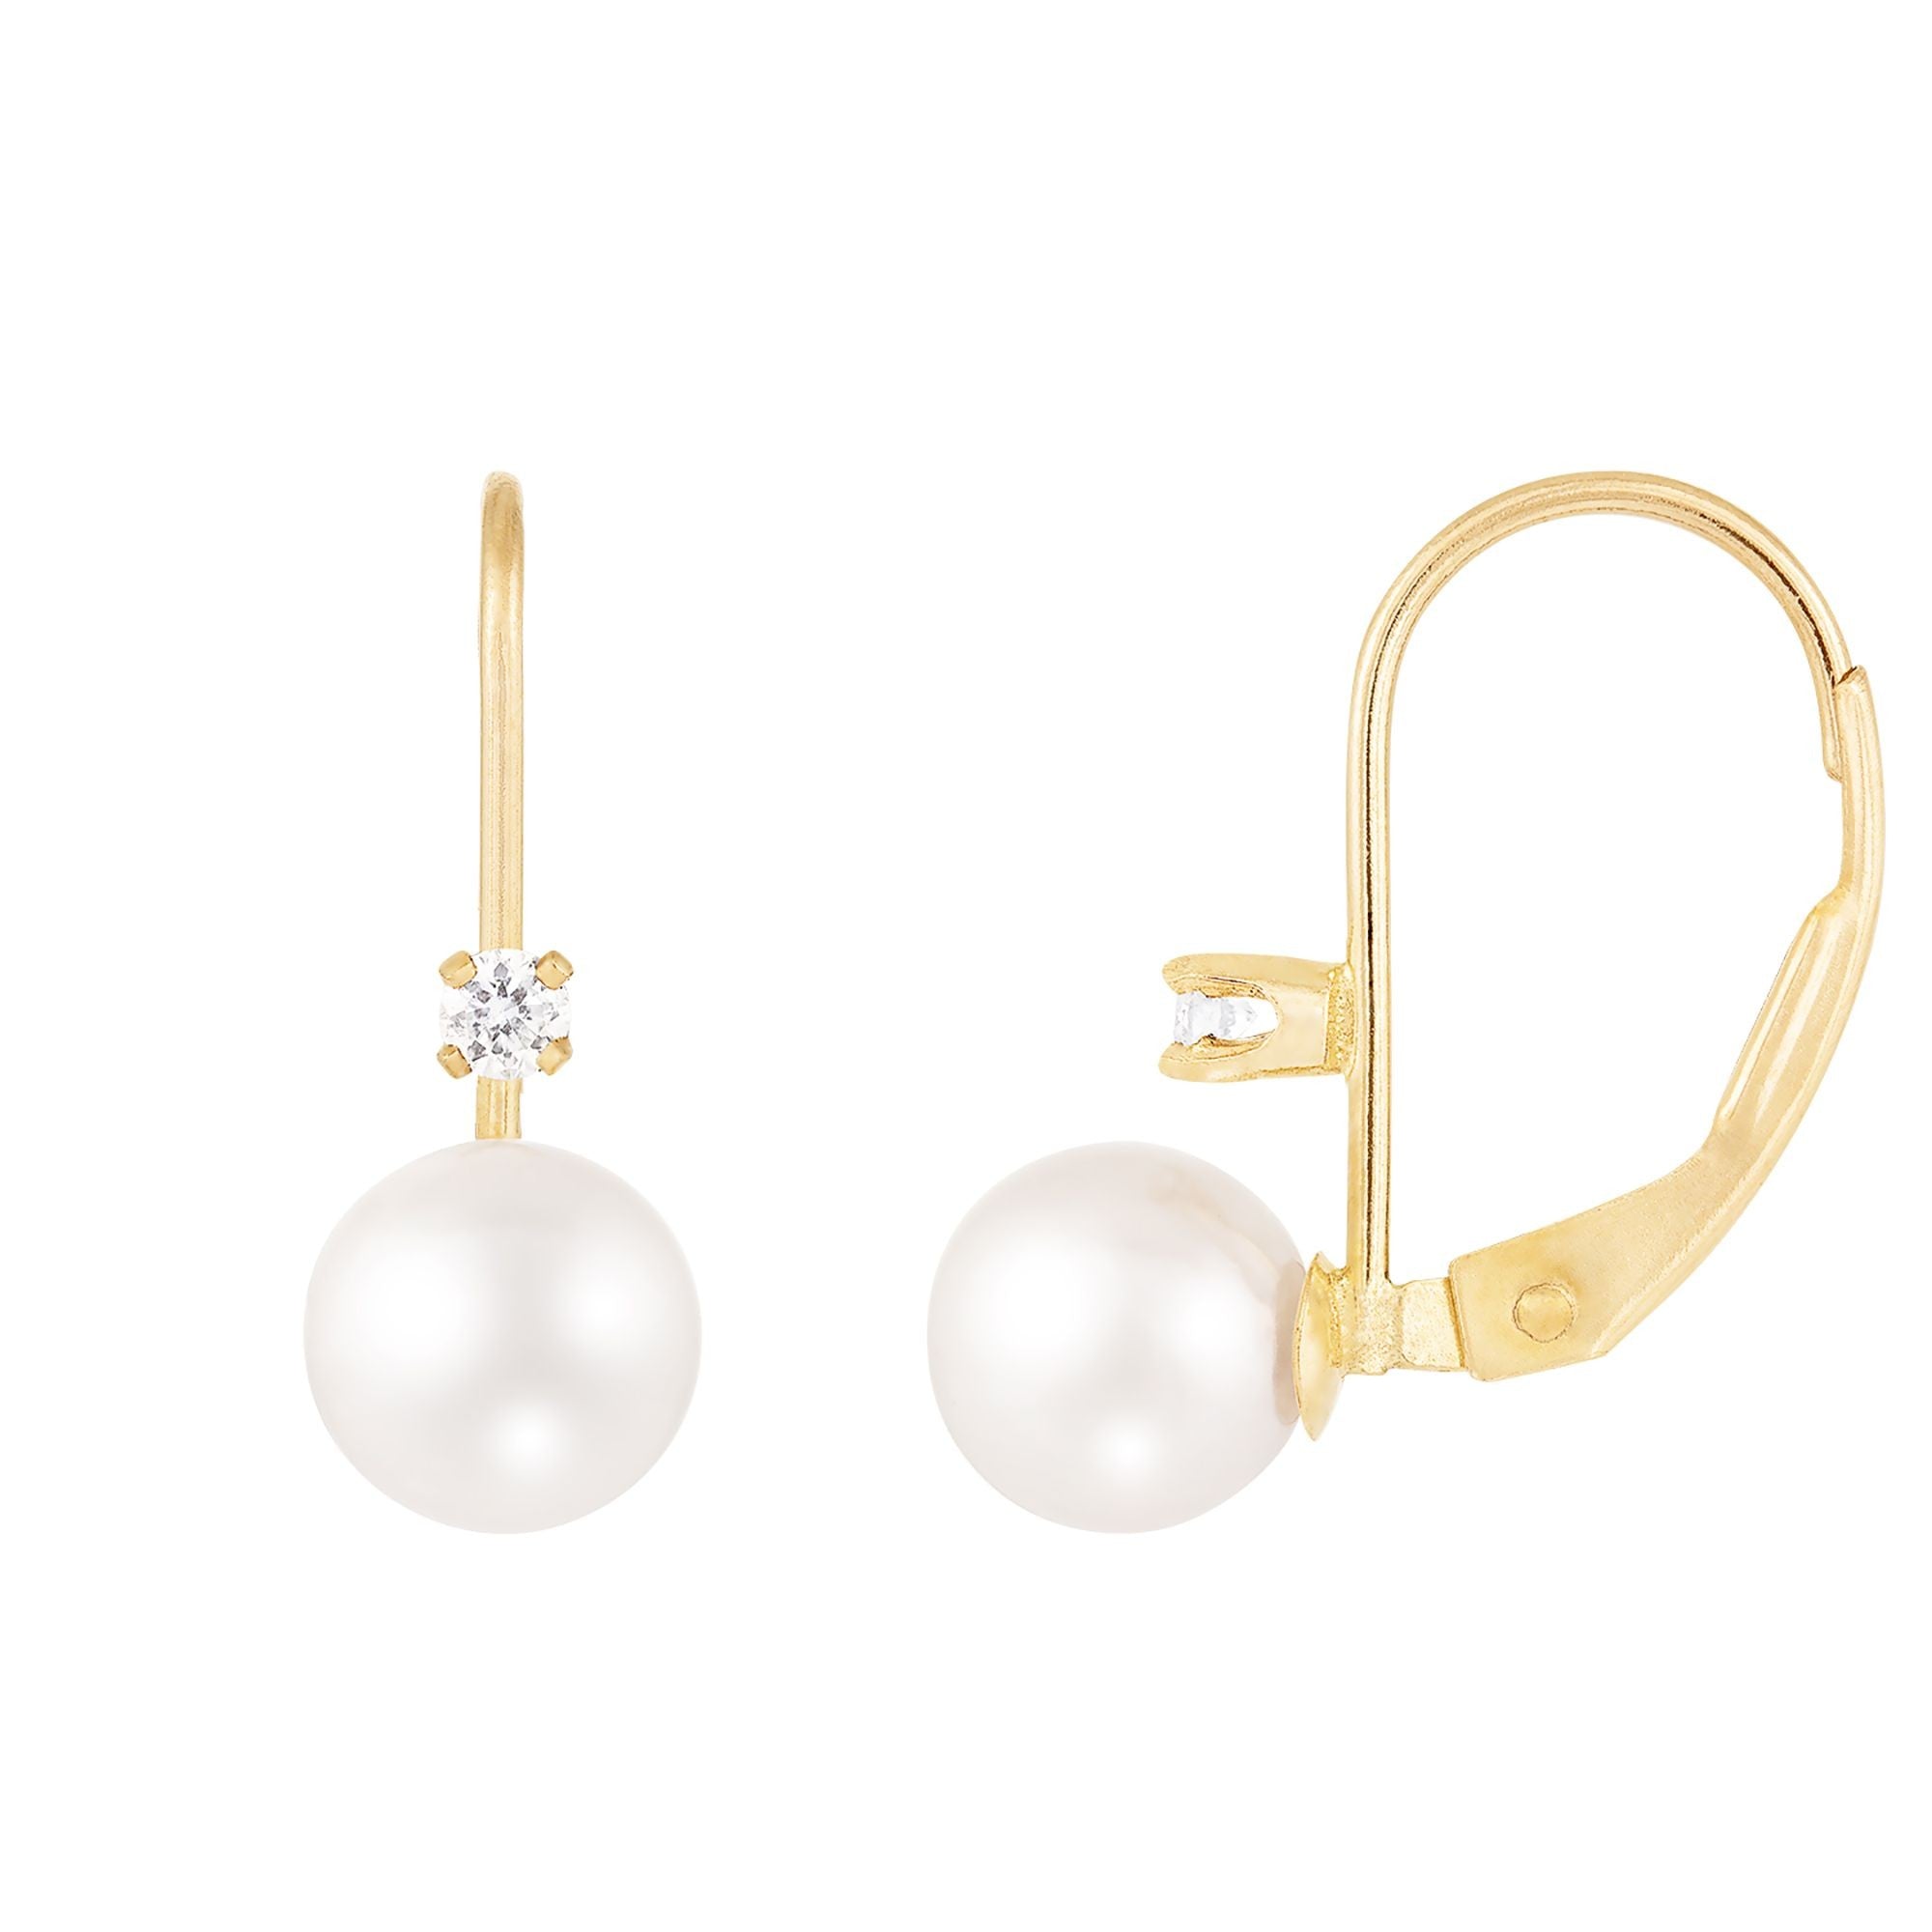 title:Splendid Pearls 14K Yellow Gold Diamond Earrings HOCPD-1WY;color:White